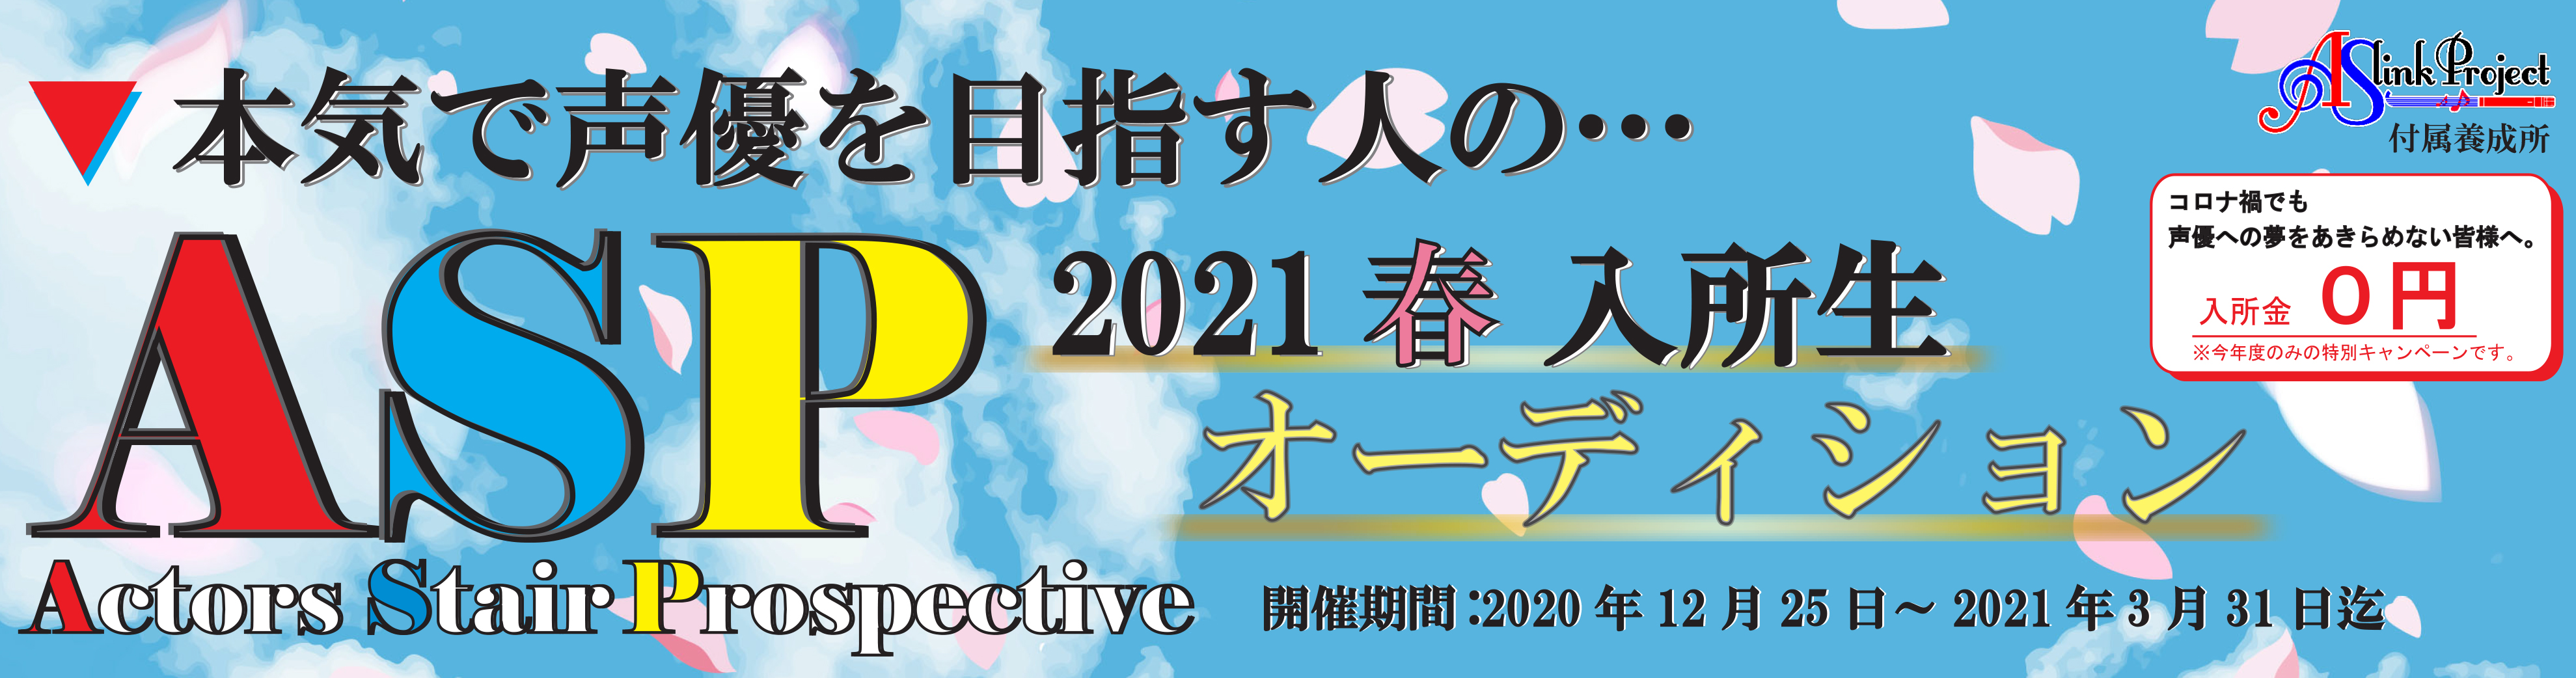 2021春HPバナー2021_asp入所2_最新０円